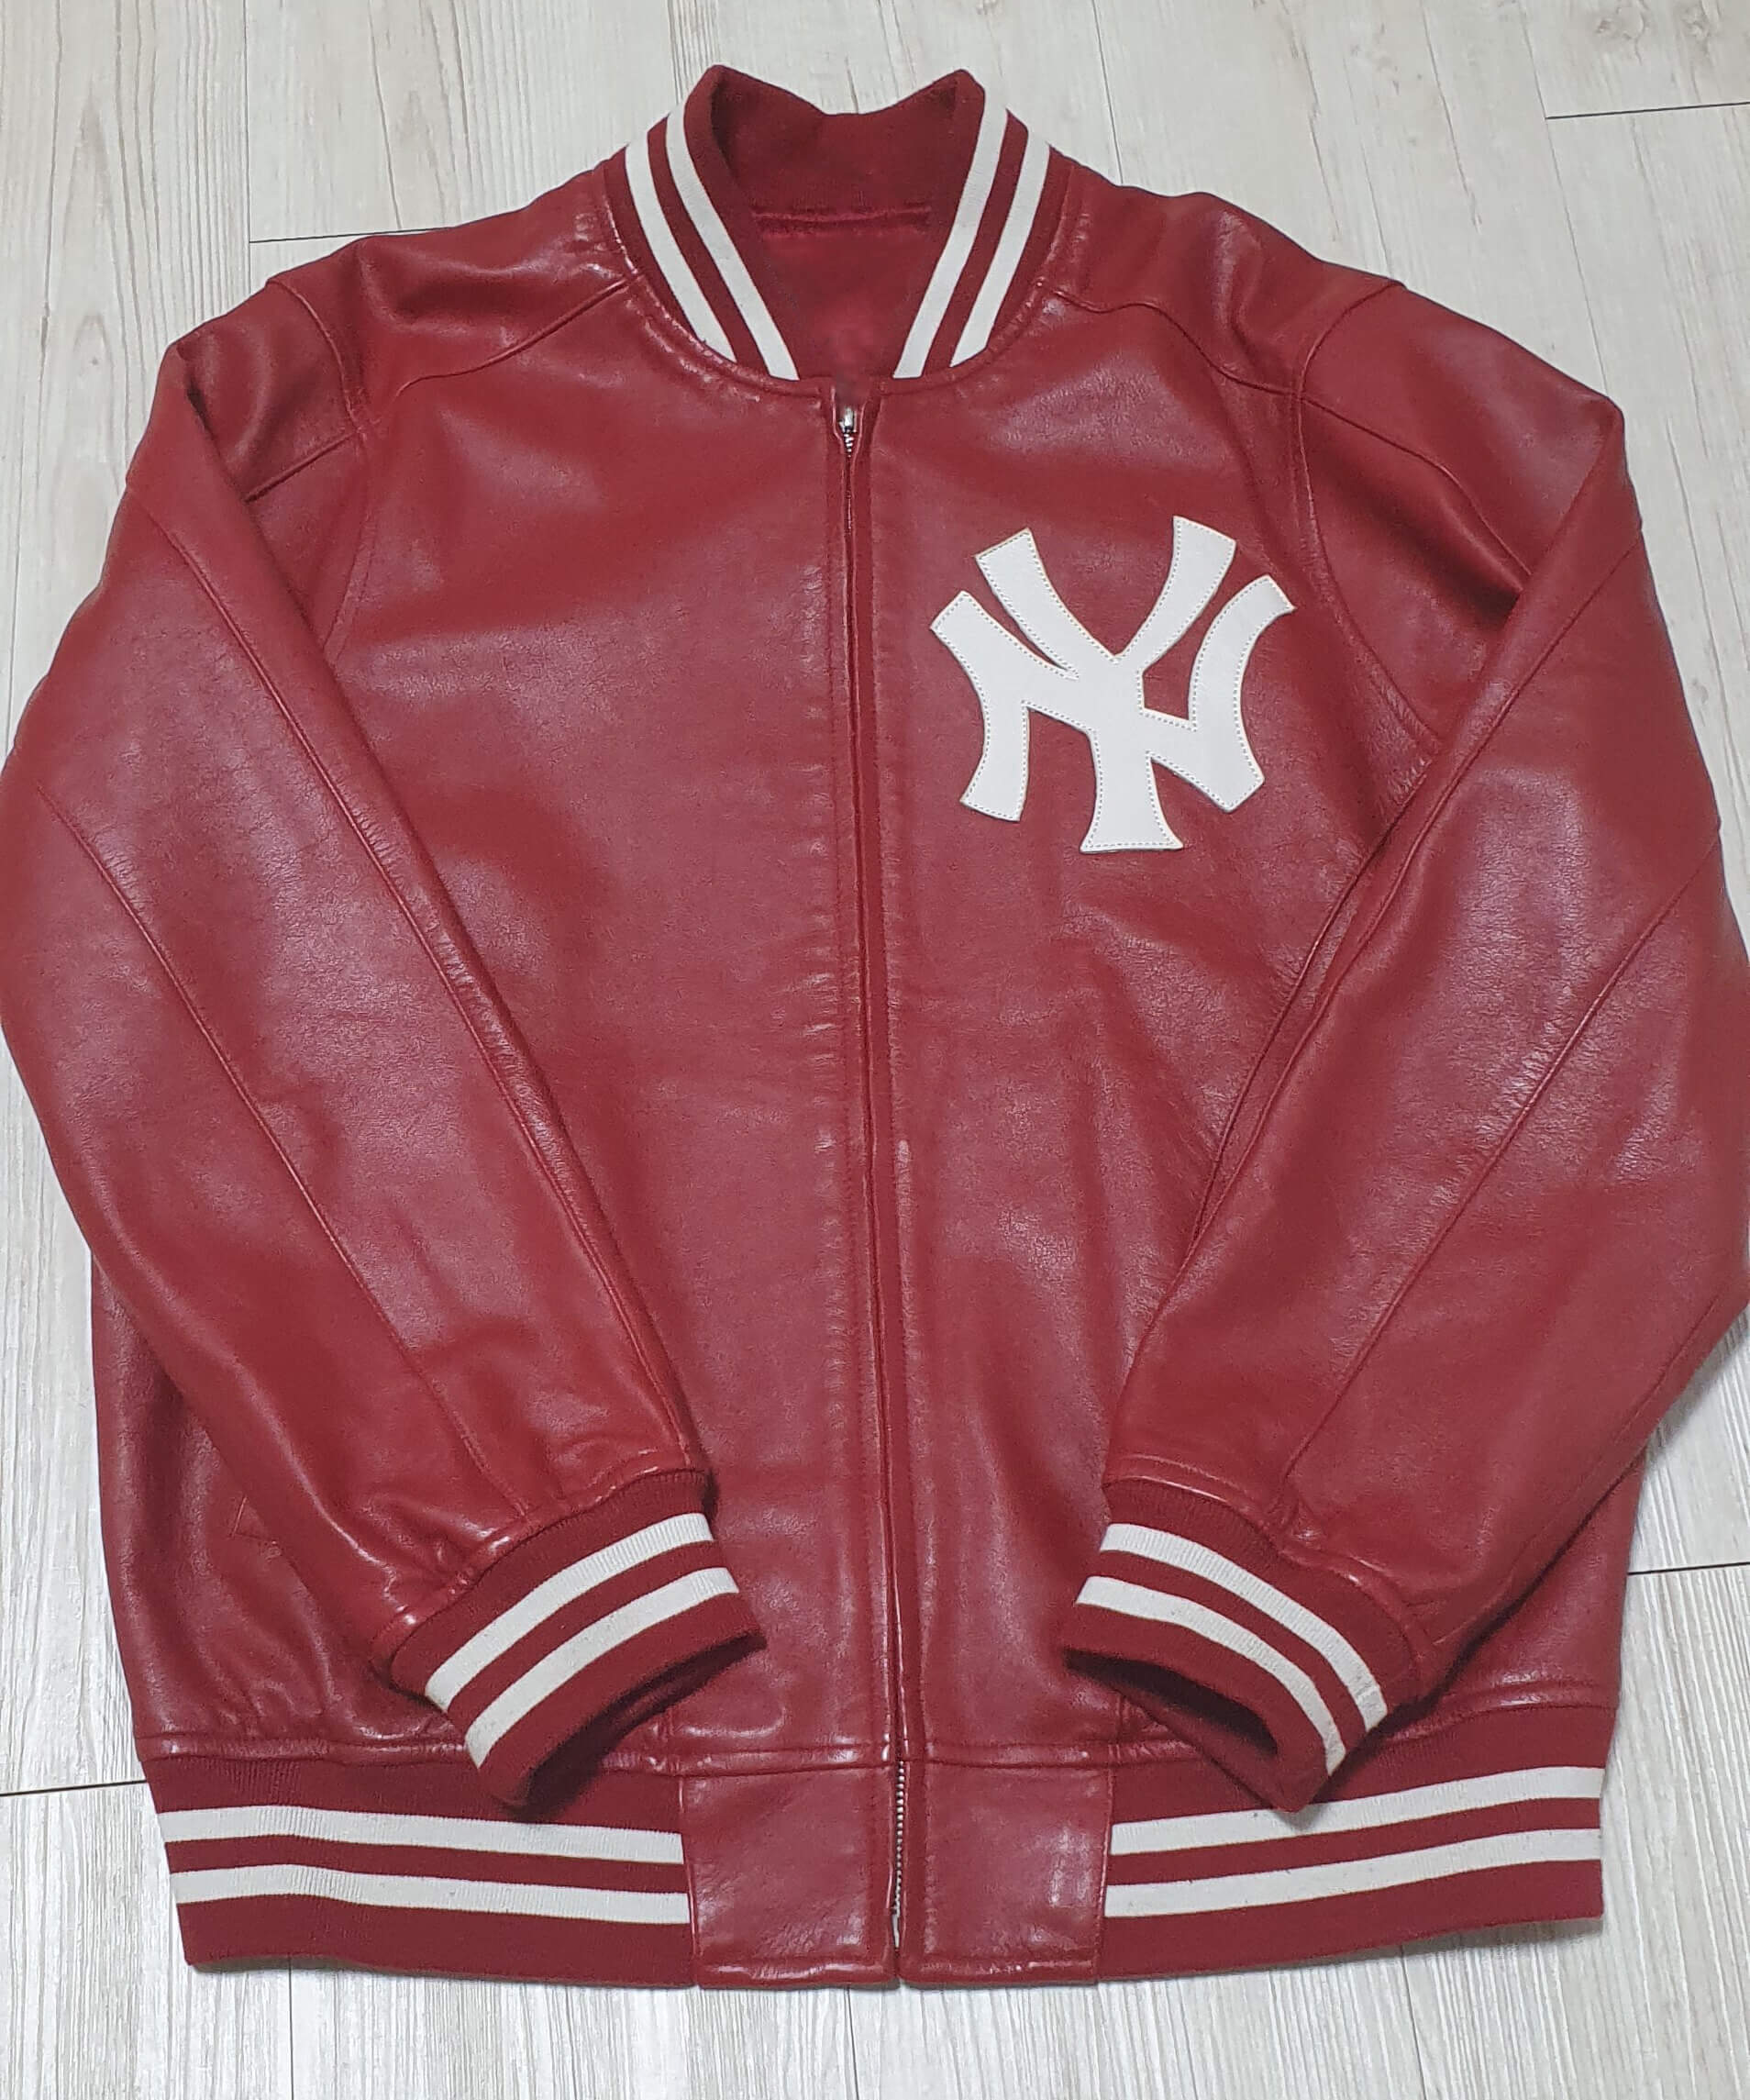 Maker of Jacket Varsity Jackets Supreme Yankees Red Leather